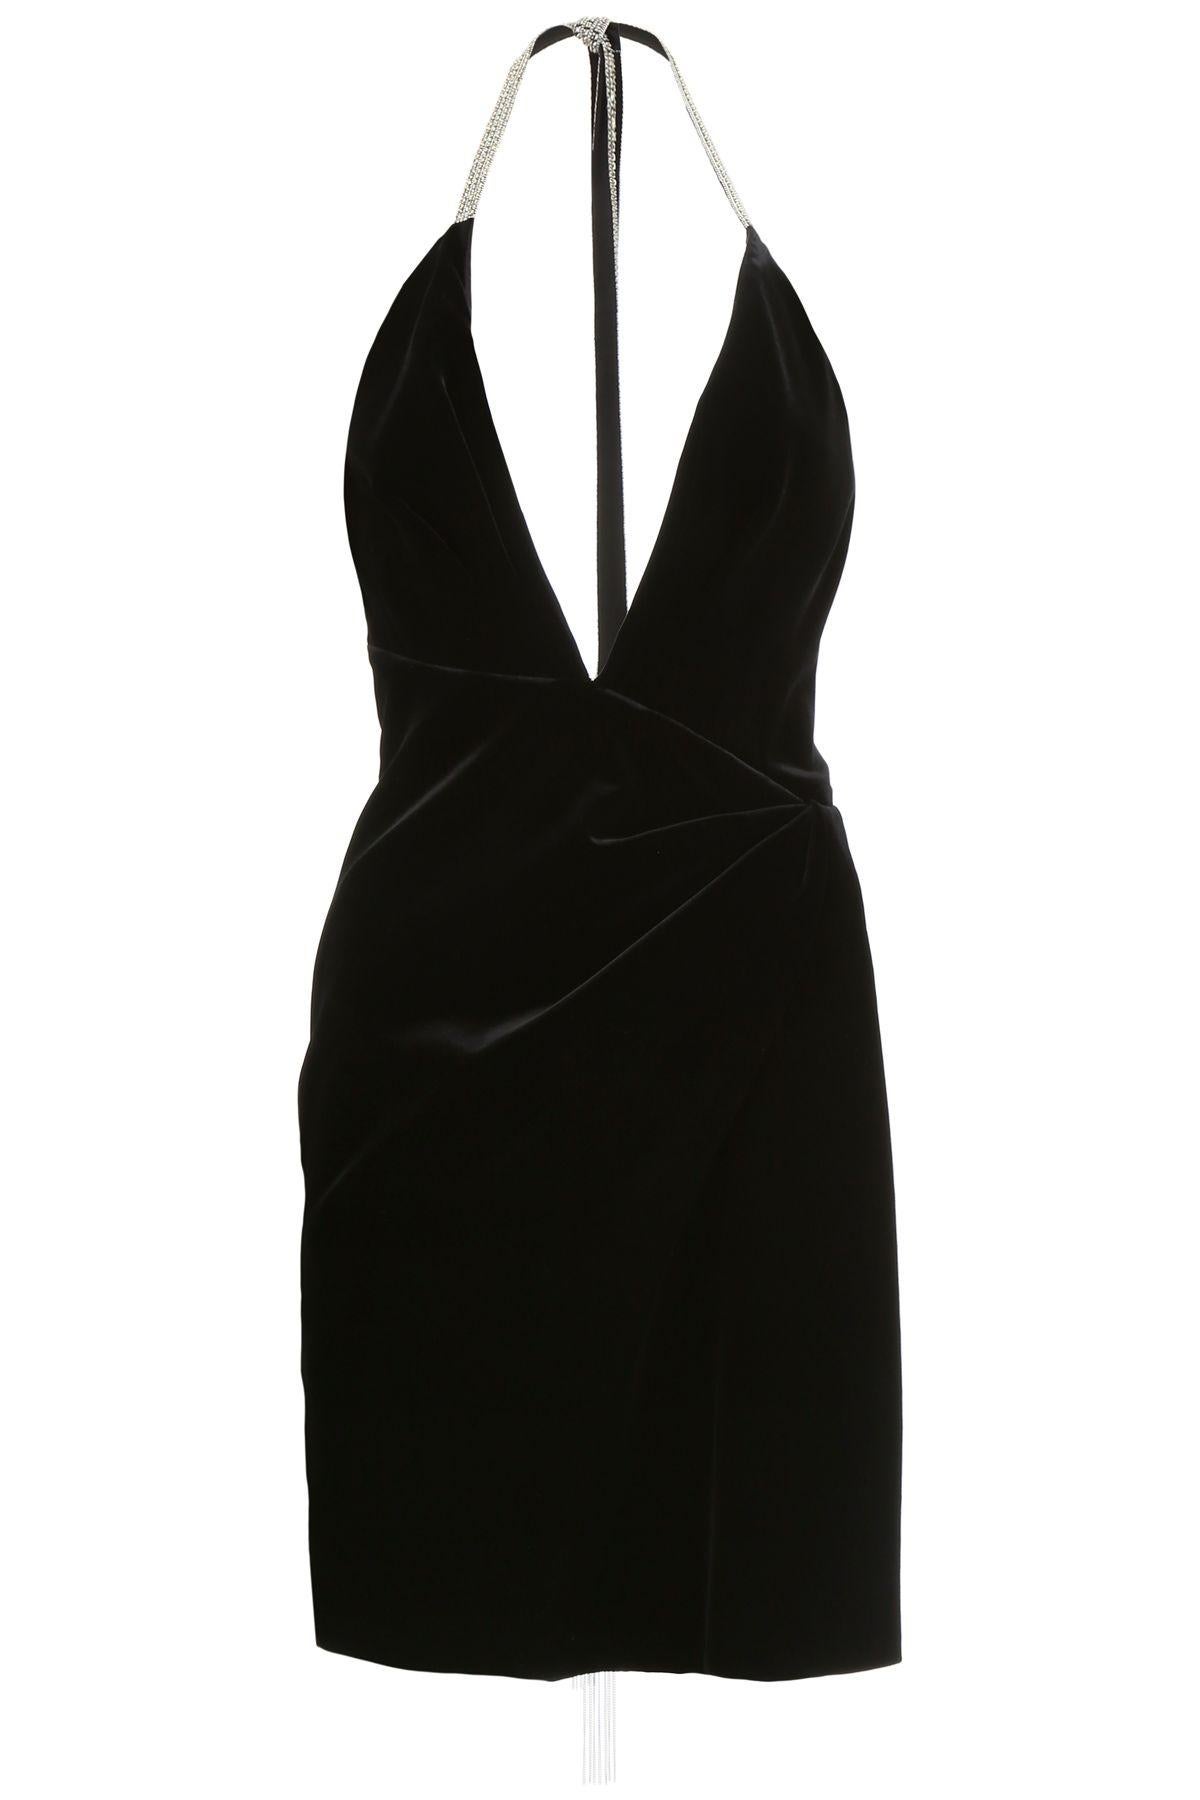 Saint Laurent Plunging Black Velvet Mini Dress with Crystal Straps Size 36